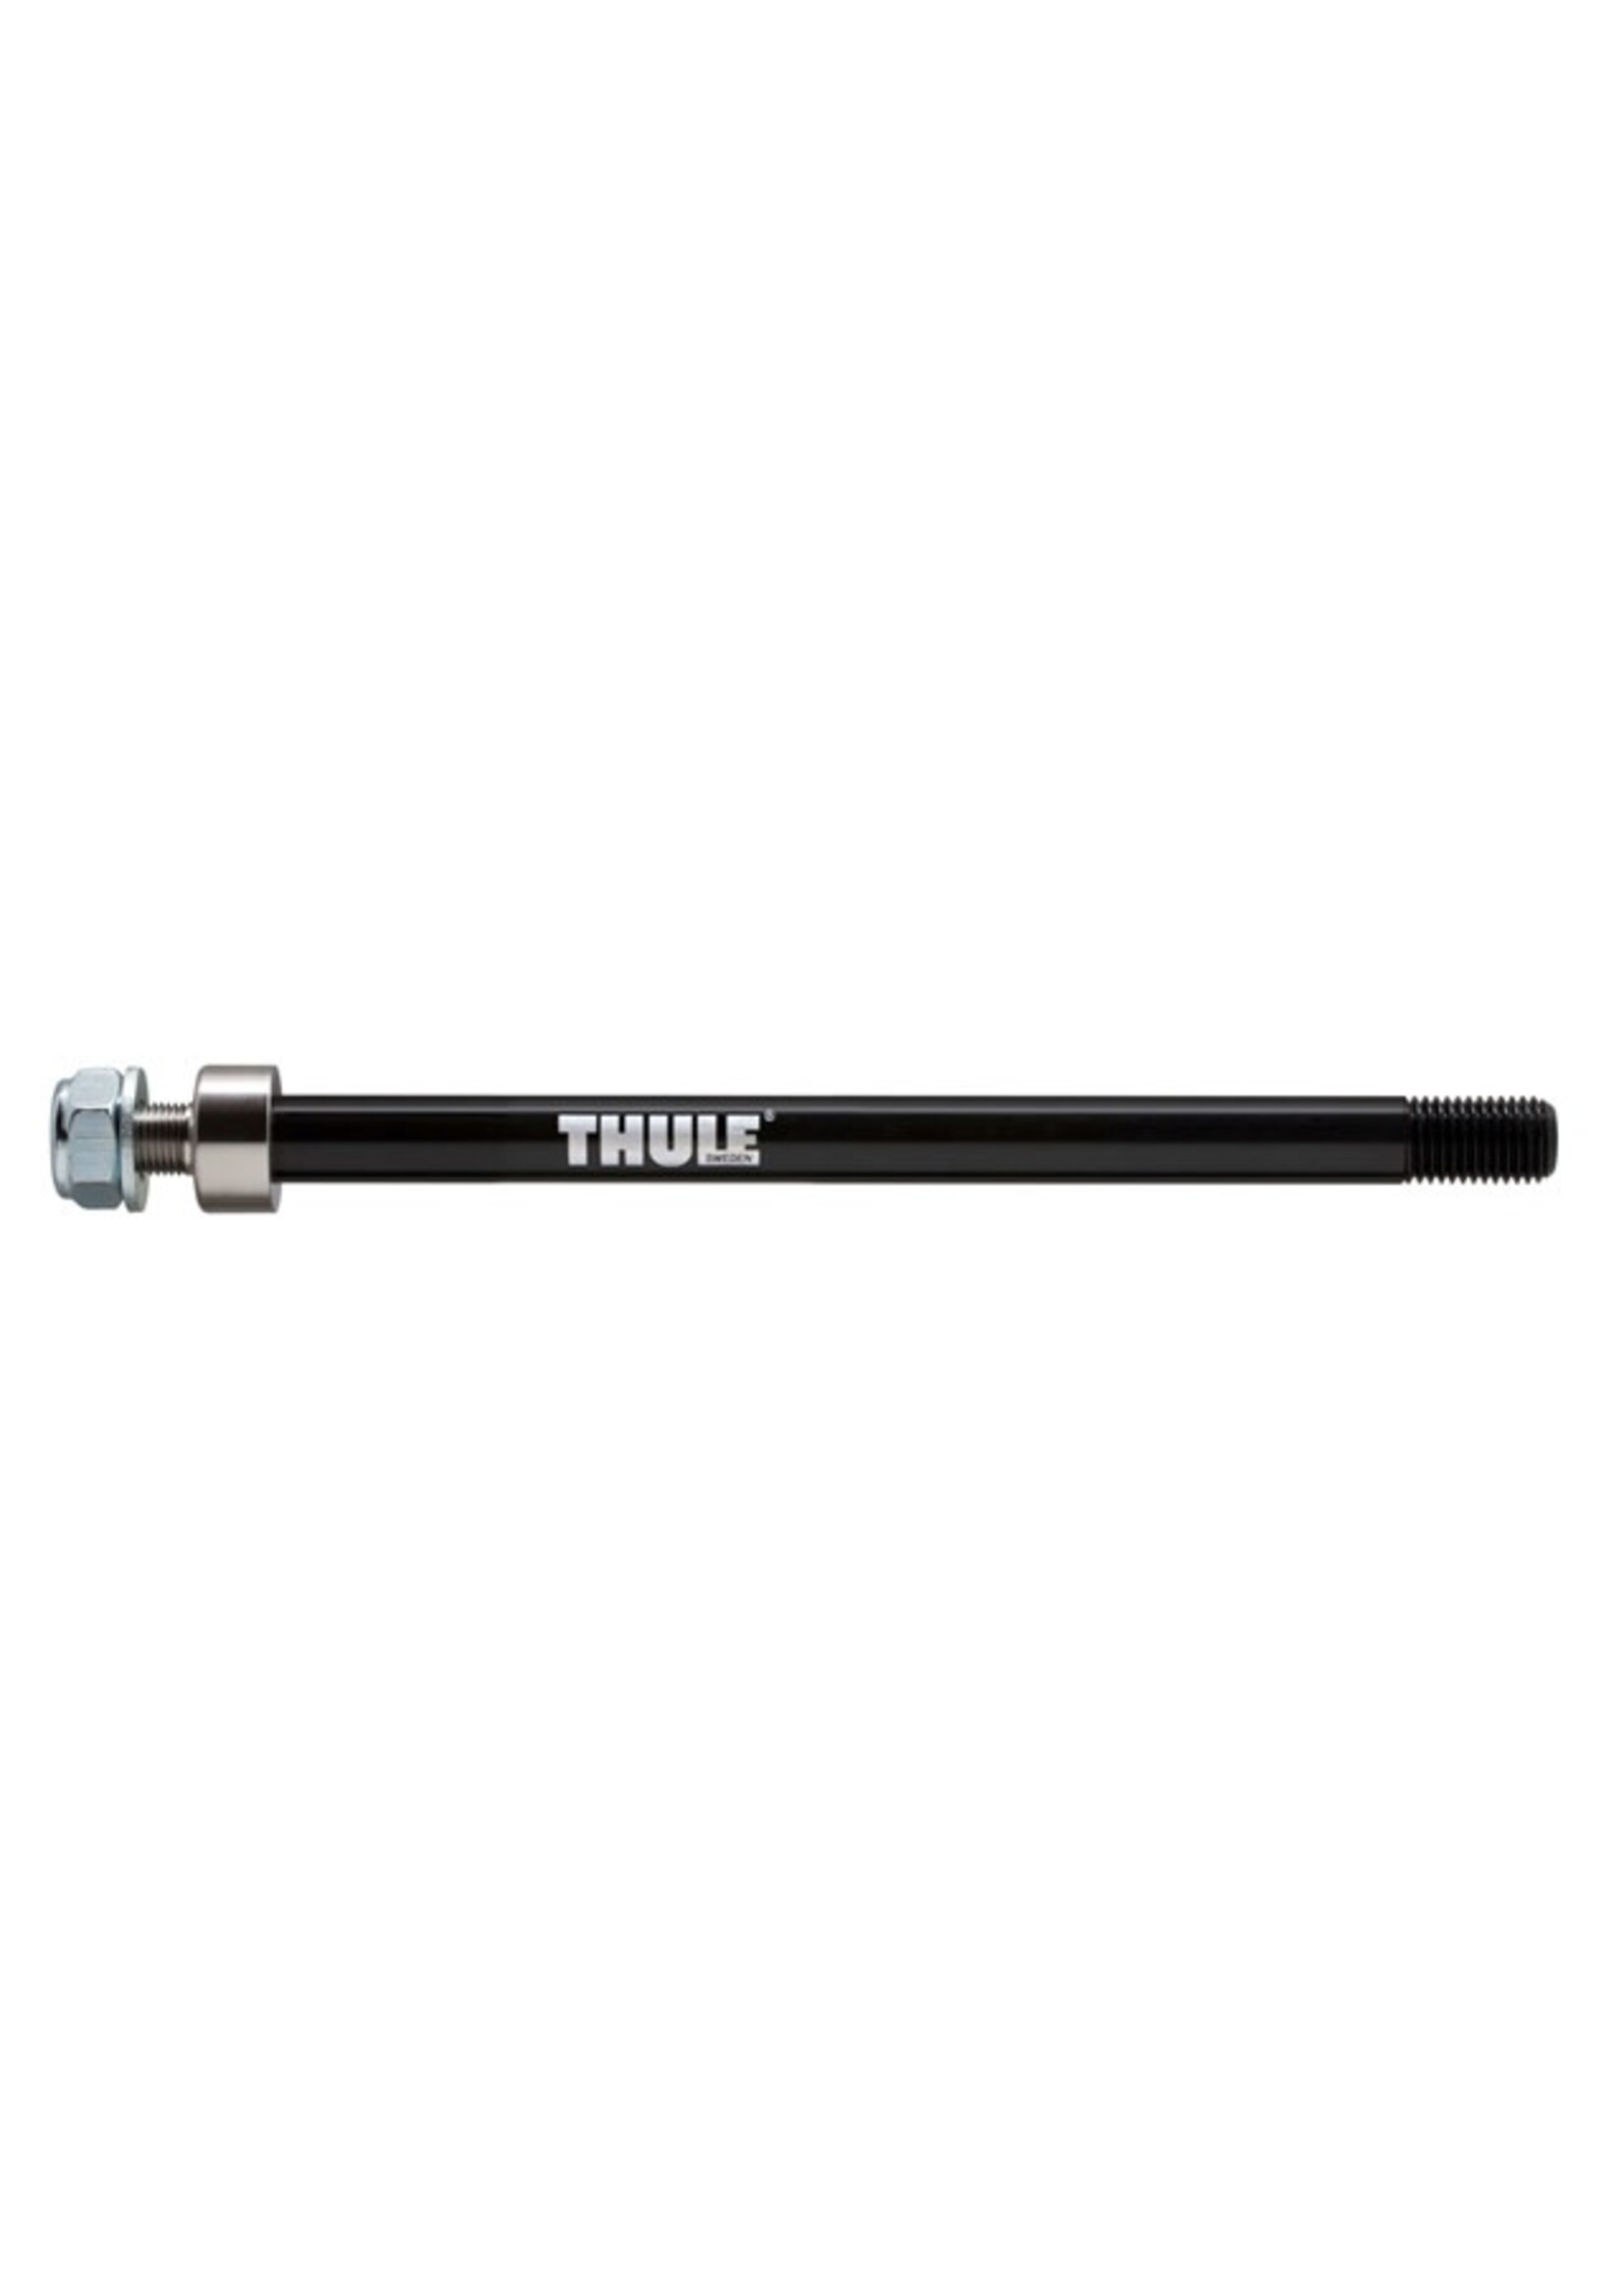 THULE THULE - Asse Perno 12X148mm (M12x1.75) Maxle (192 or 198mm)